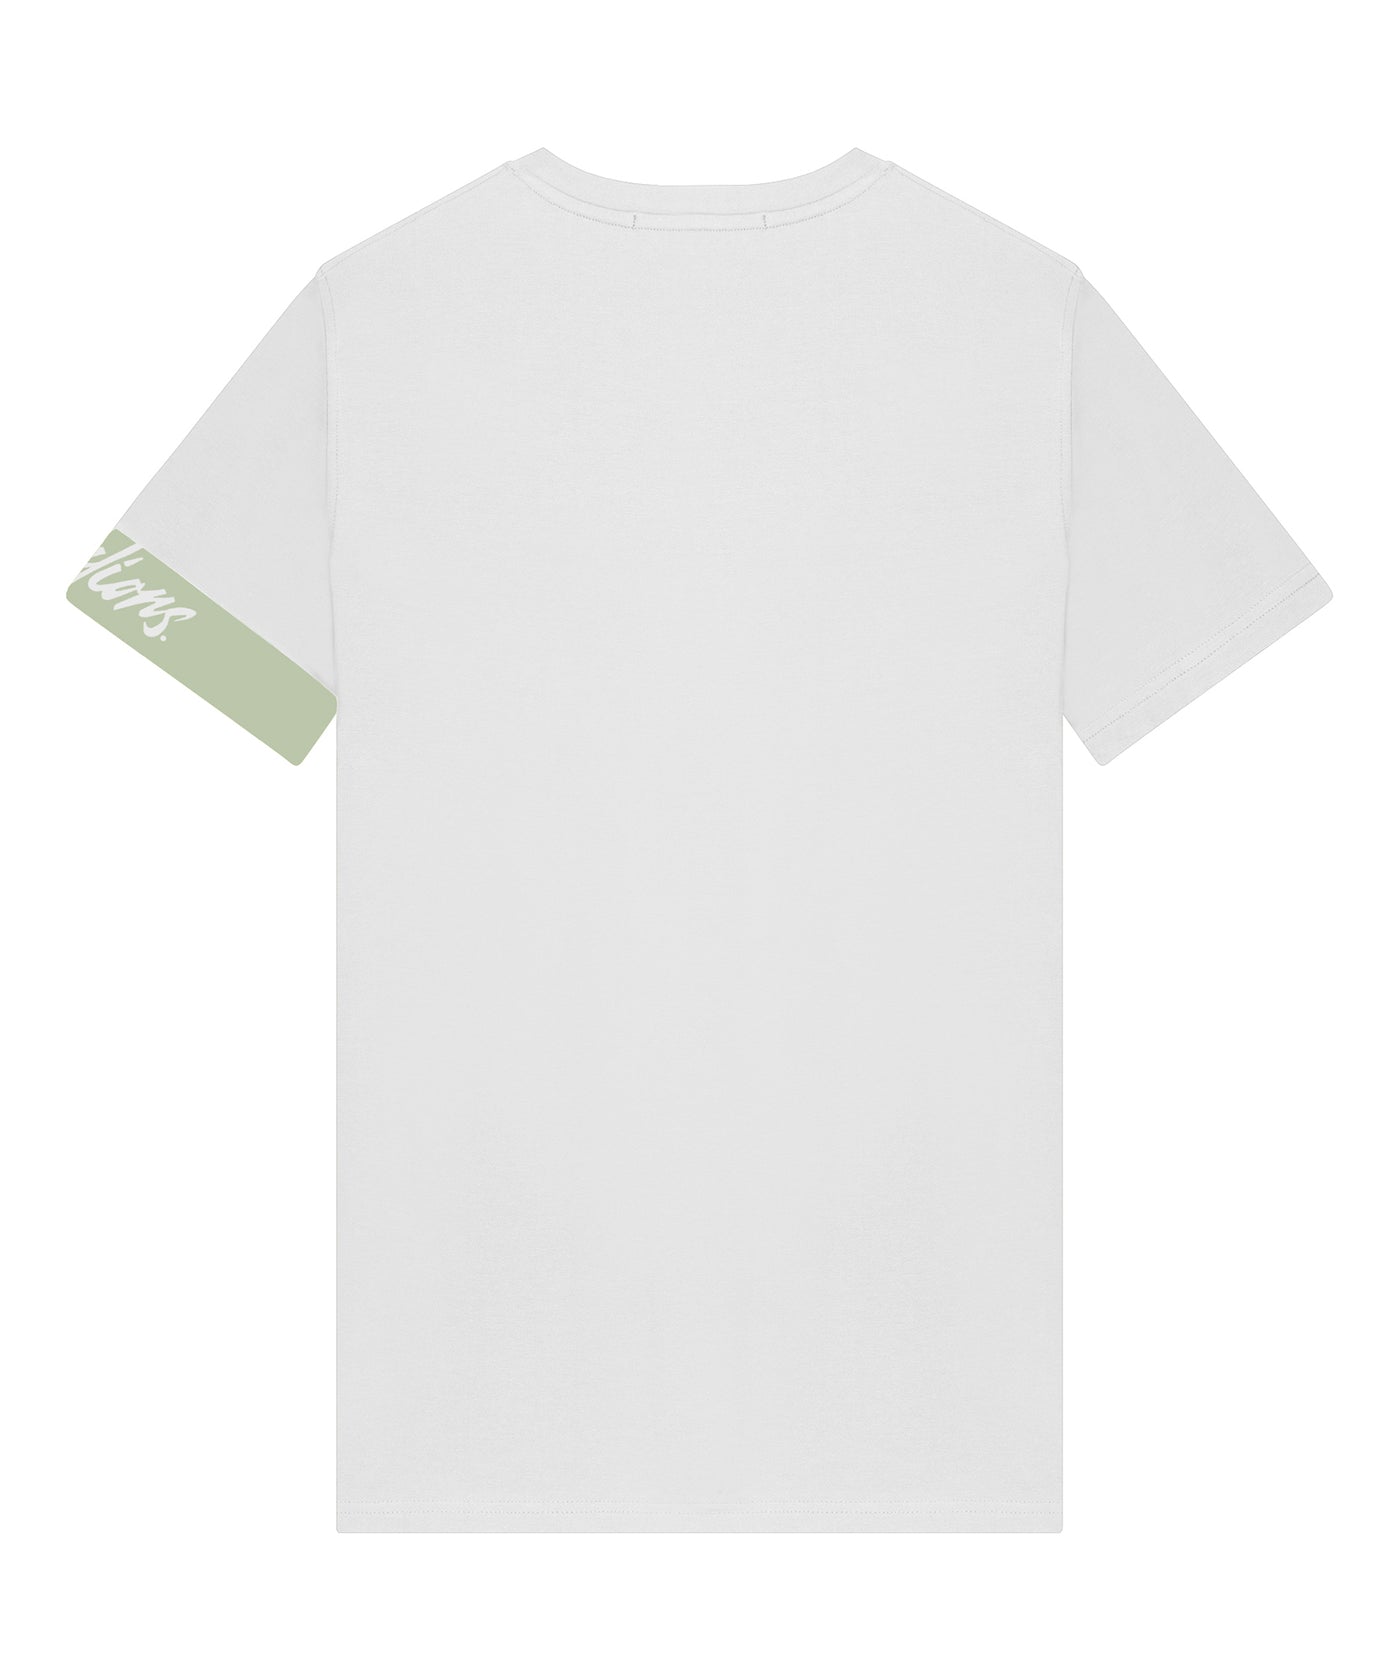 Malelions - Captain - T-shirt 2.0 - White/green